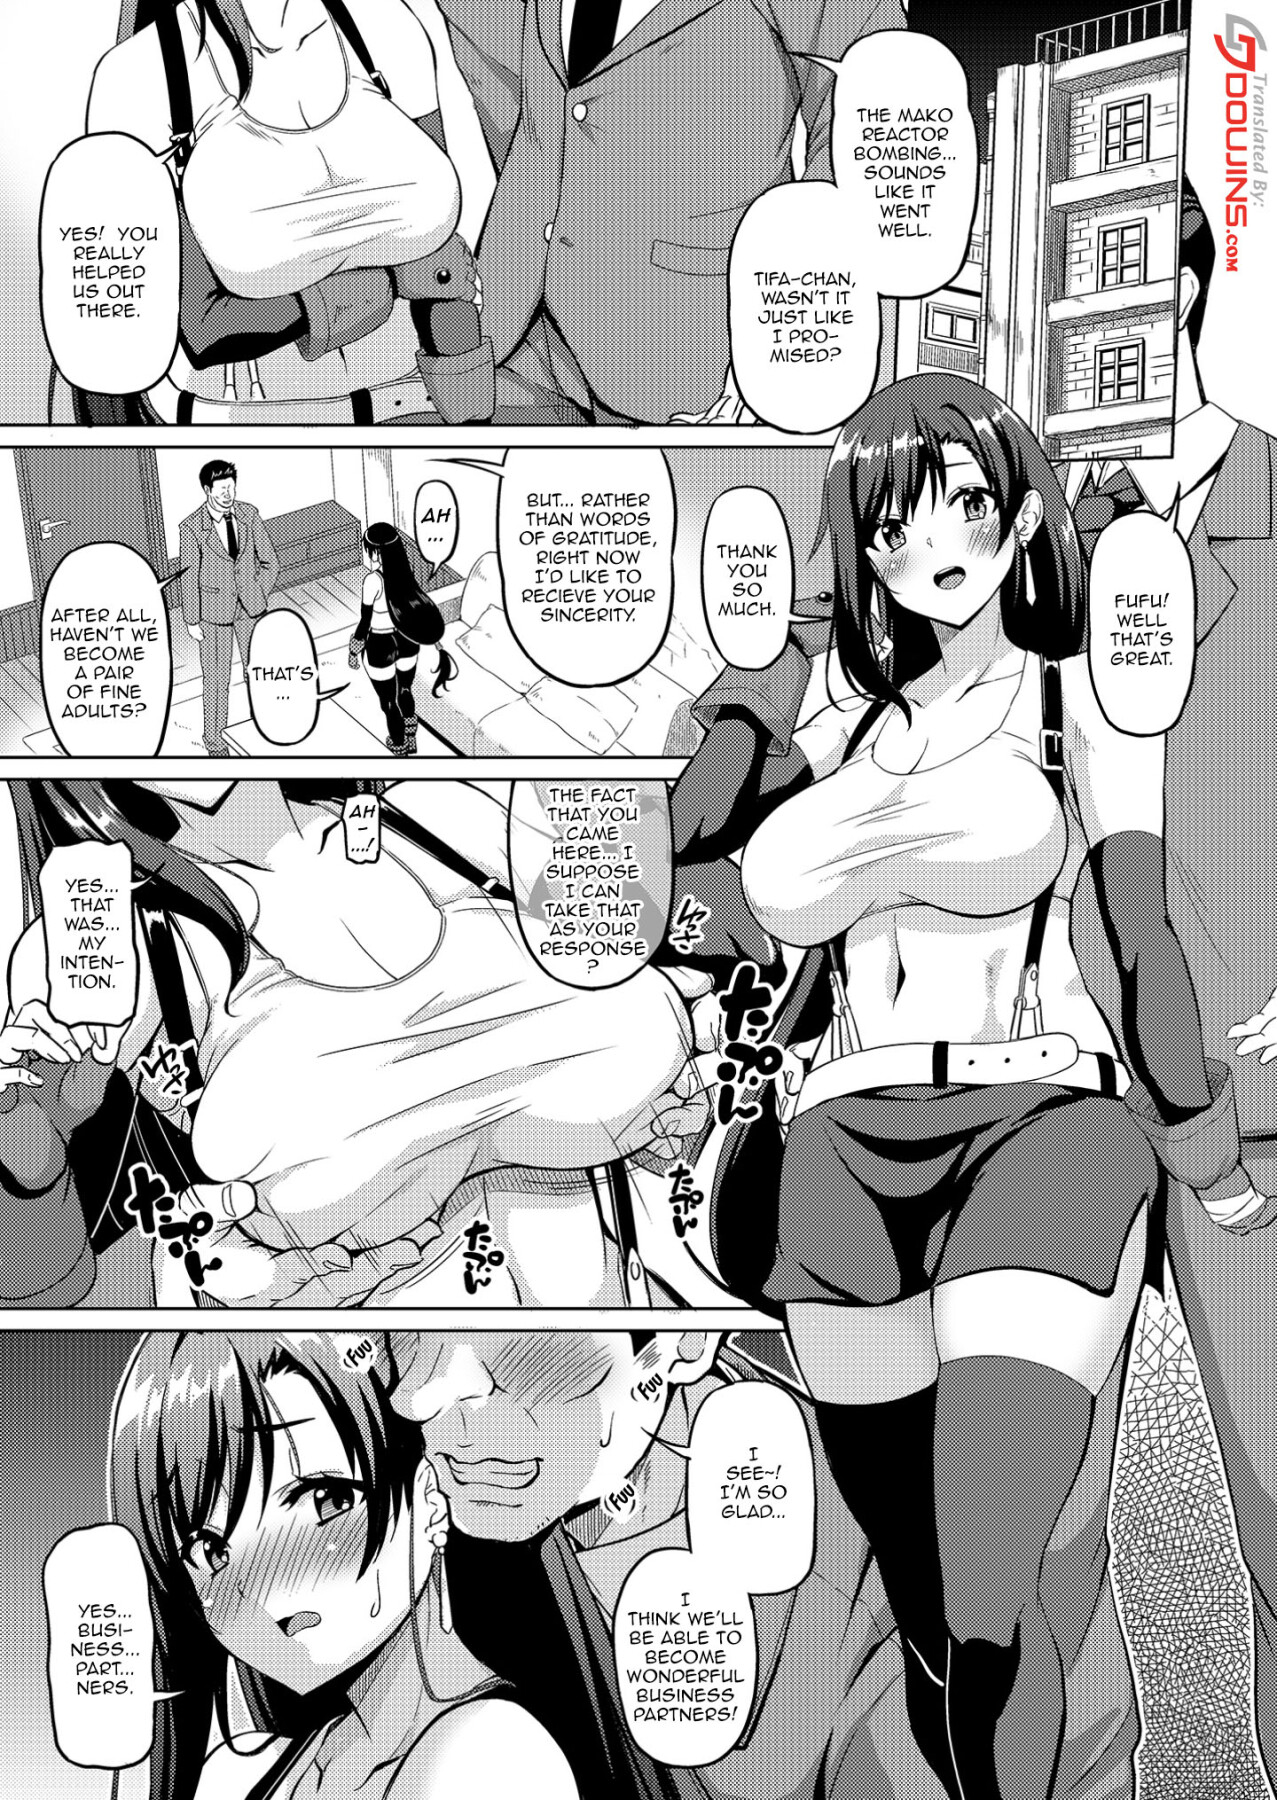 Hentai Manga Comic-Big Breasted Fantasy 3-Read-2